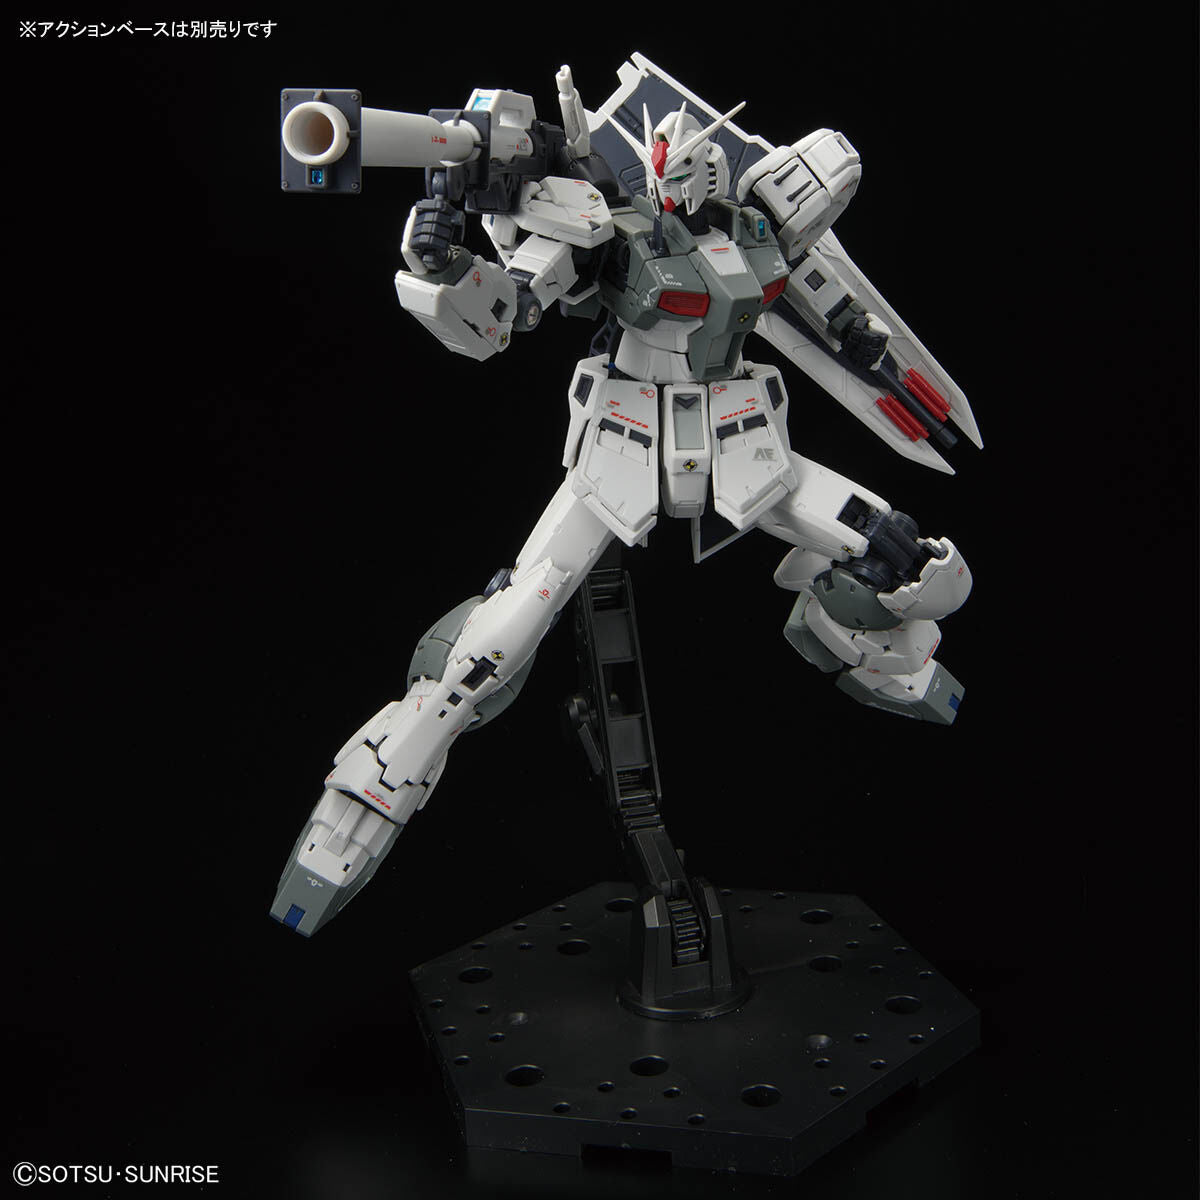 RG 1/144 GUNDAM SIDE-F Limited ν Gundam (First Lot Color Ver.) *PRE-ORDER*